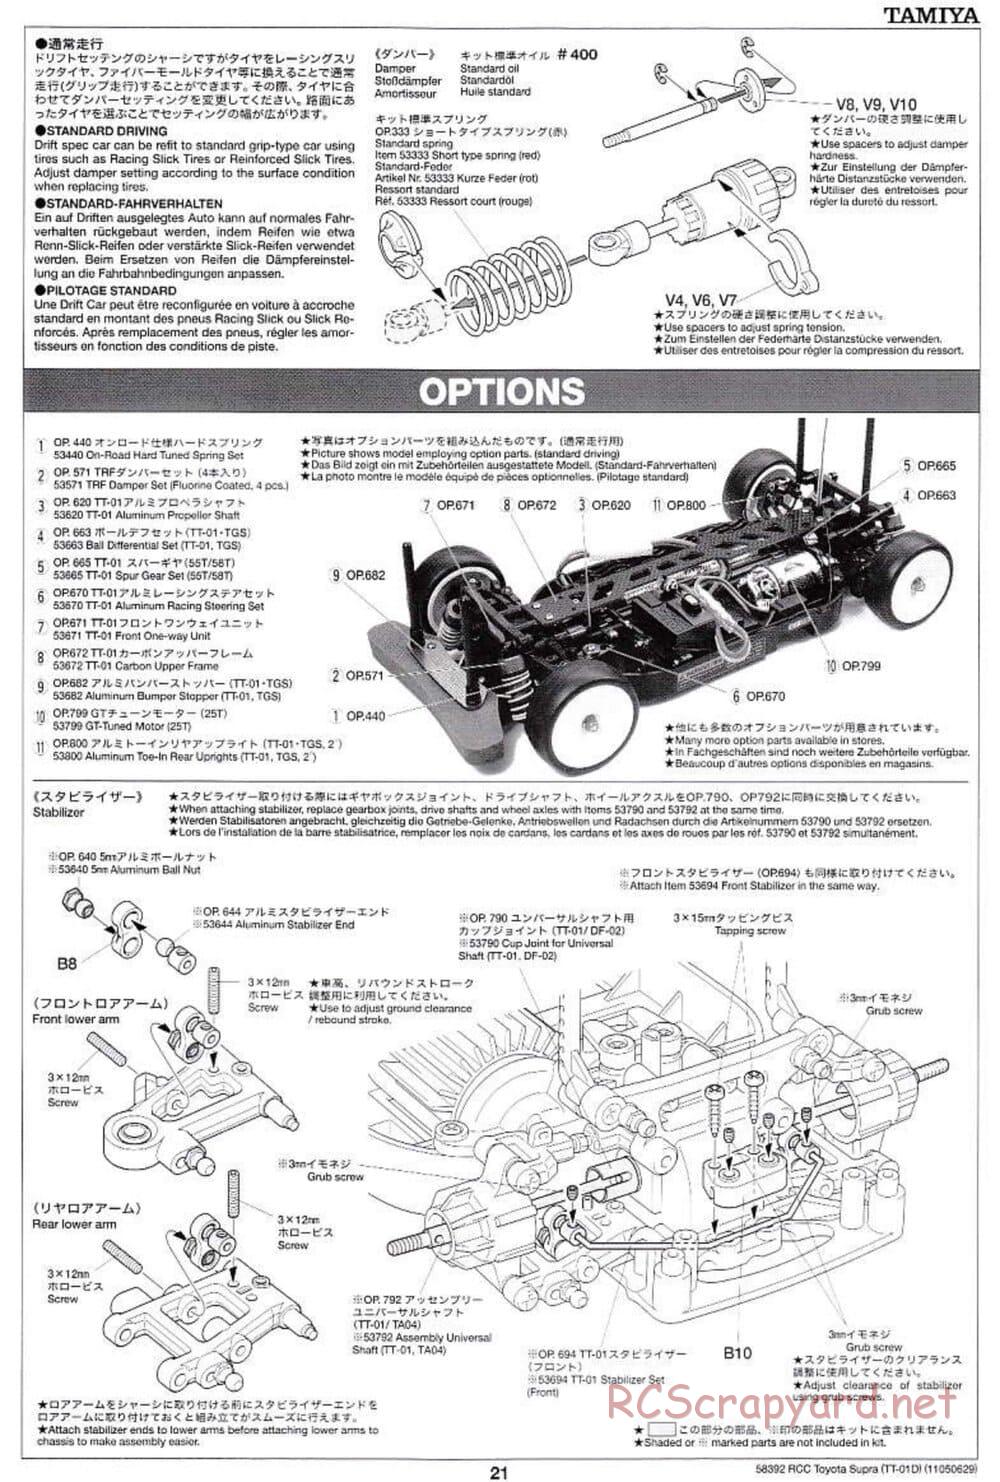 Tamiya - Toyota Supra - Drift Spec - TT-01D Chassis - Manual - Page 21